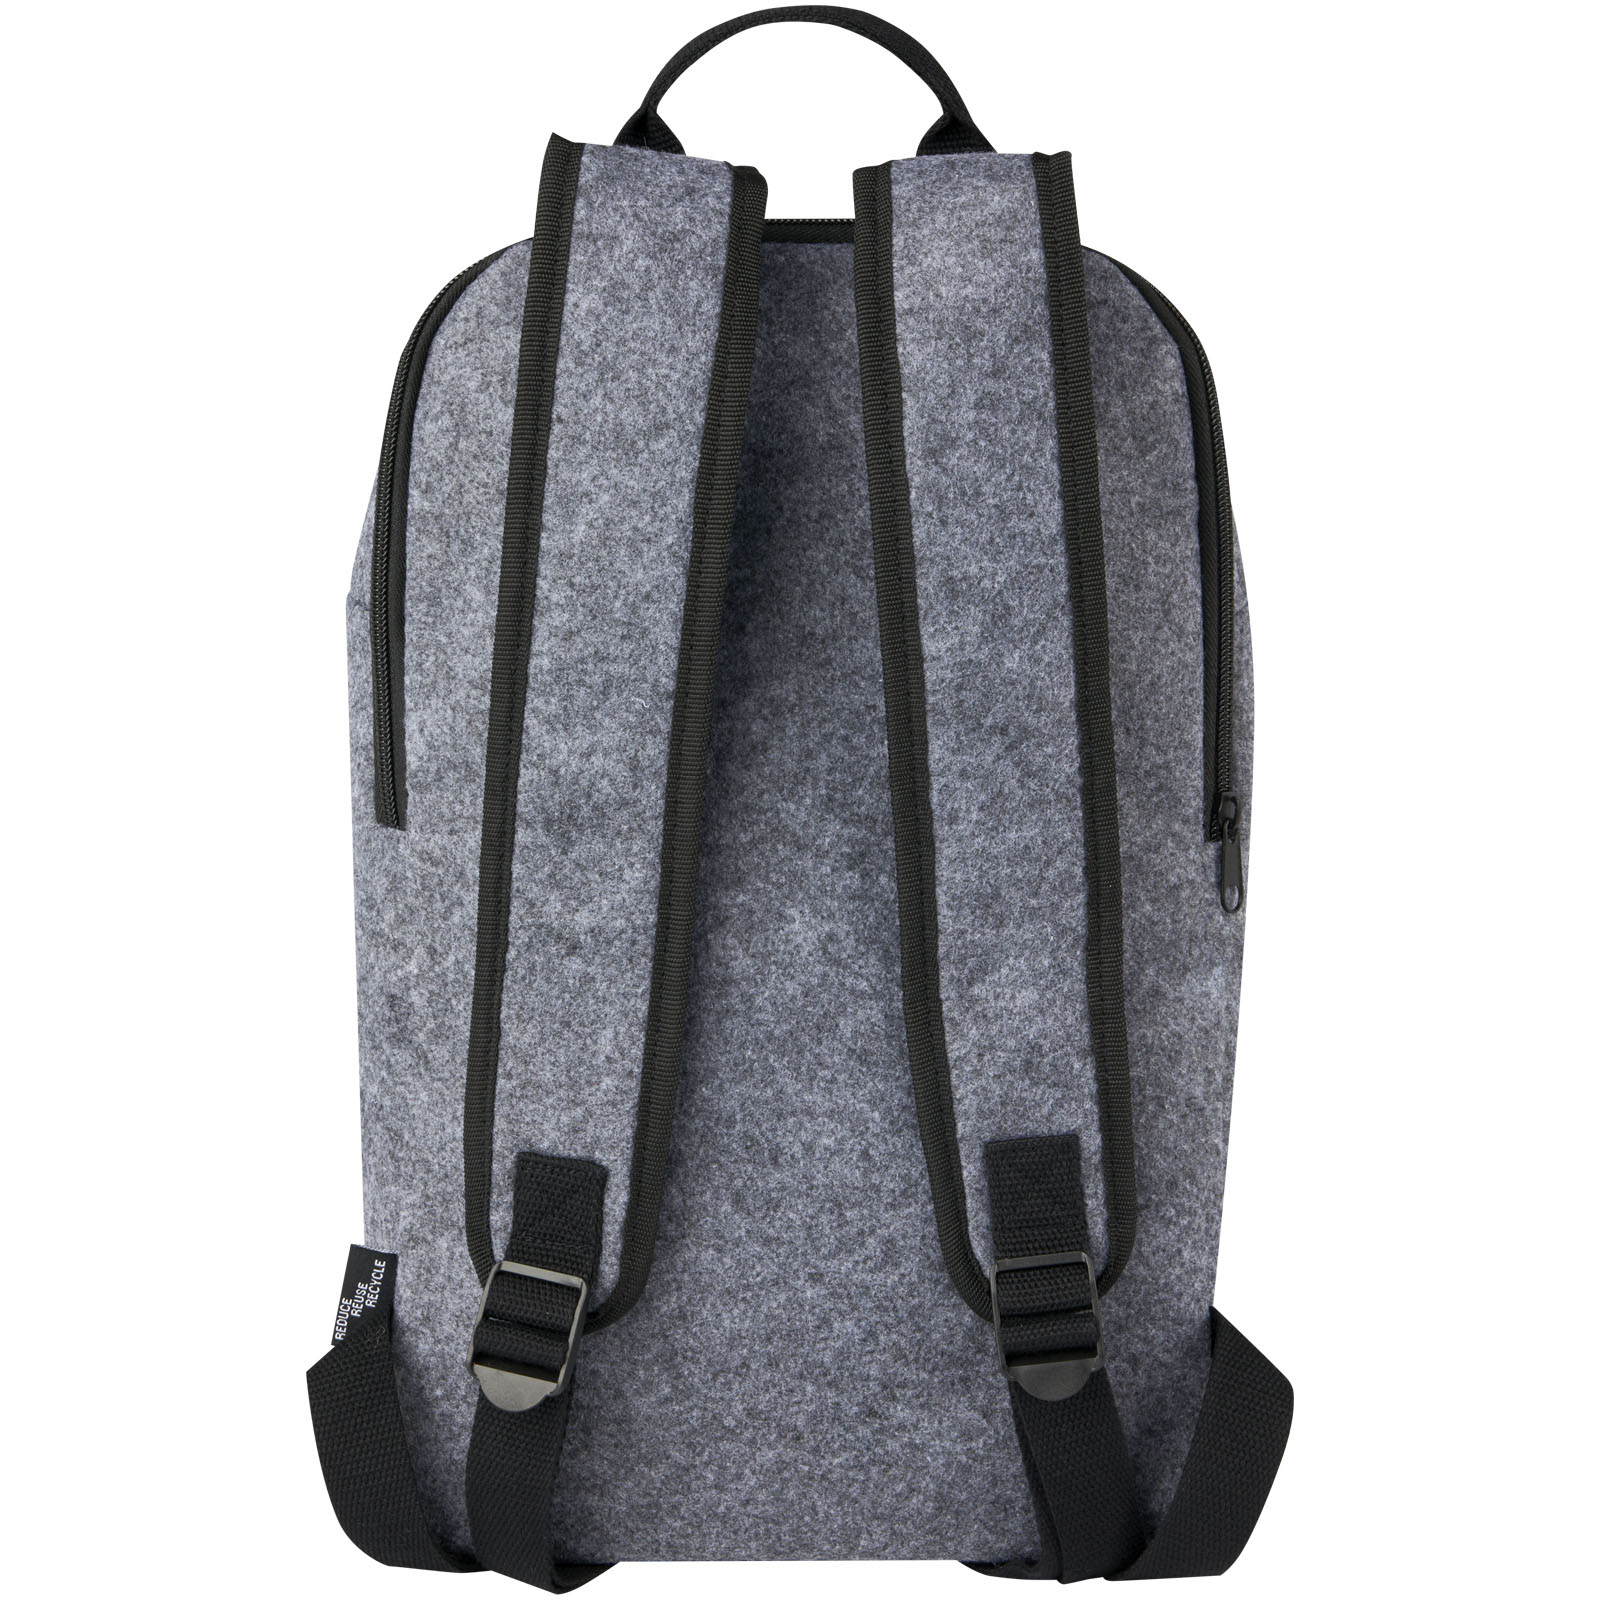 Advertising Cooler bags - Felta GRS recycled felt cooler backpack 7L - 2